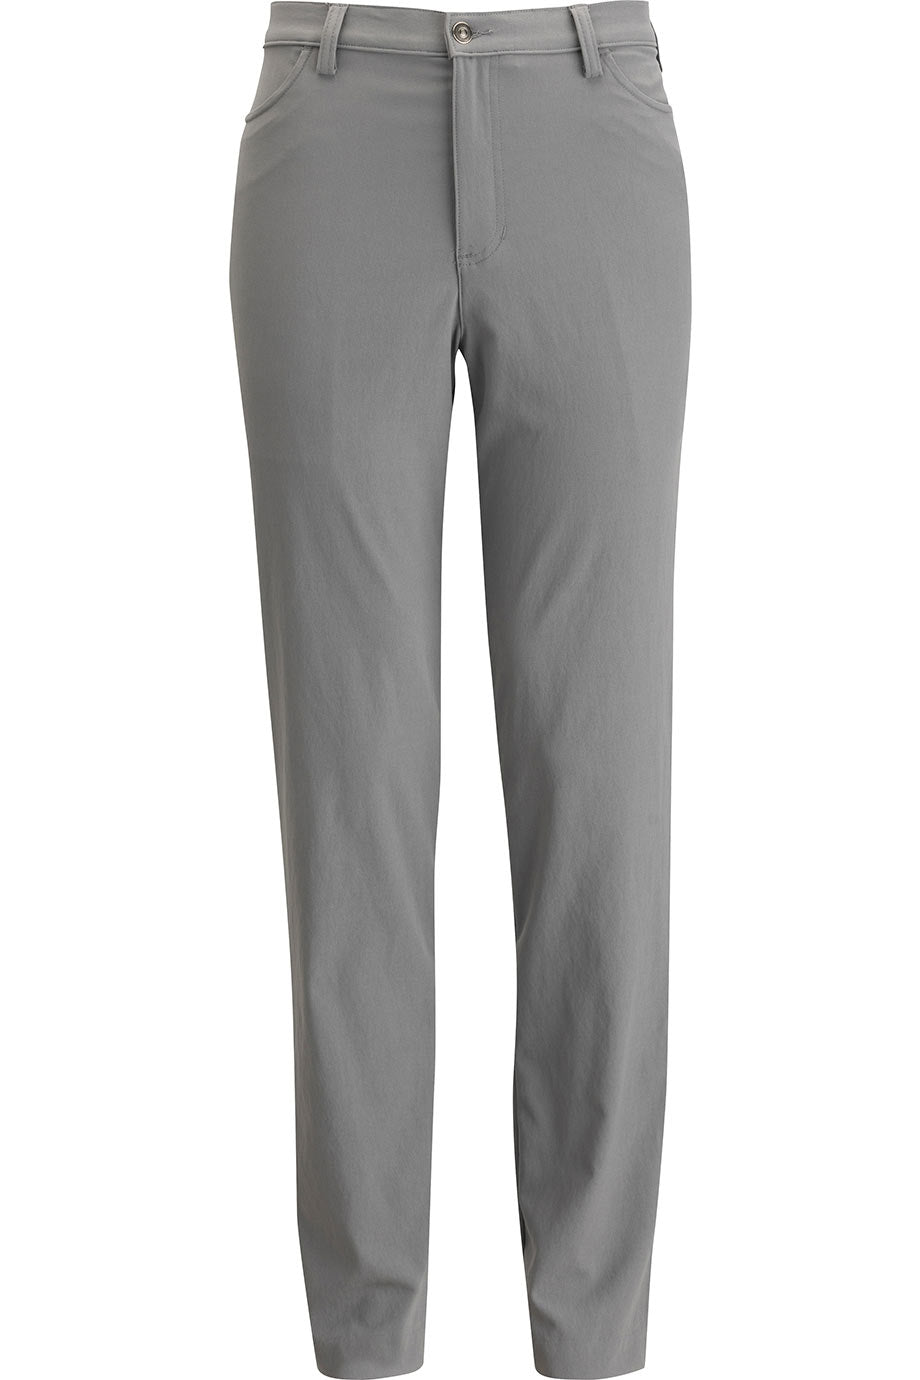 Edwards 28 Men's' Grey Flex Comfort Pant